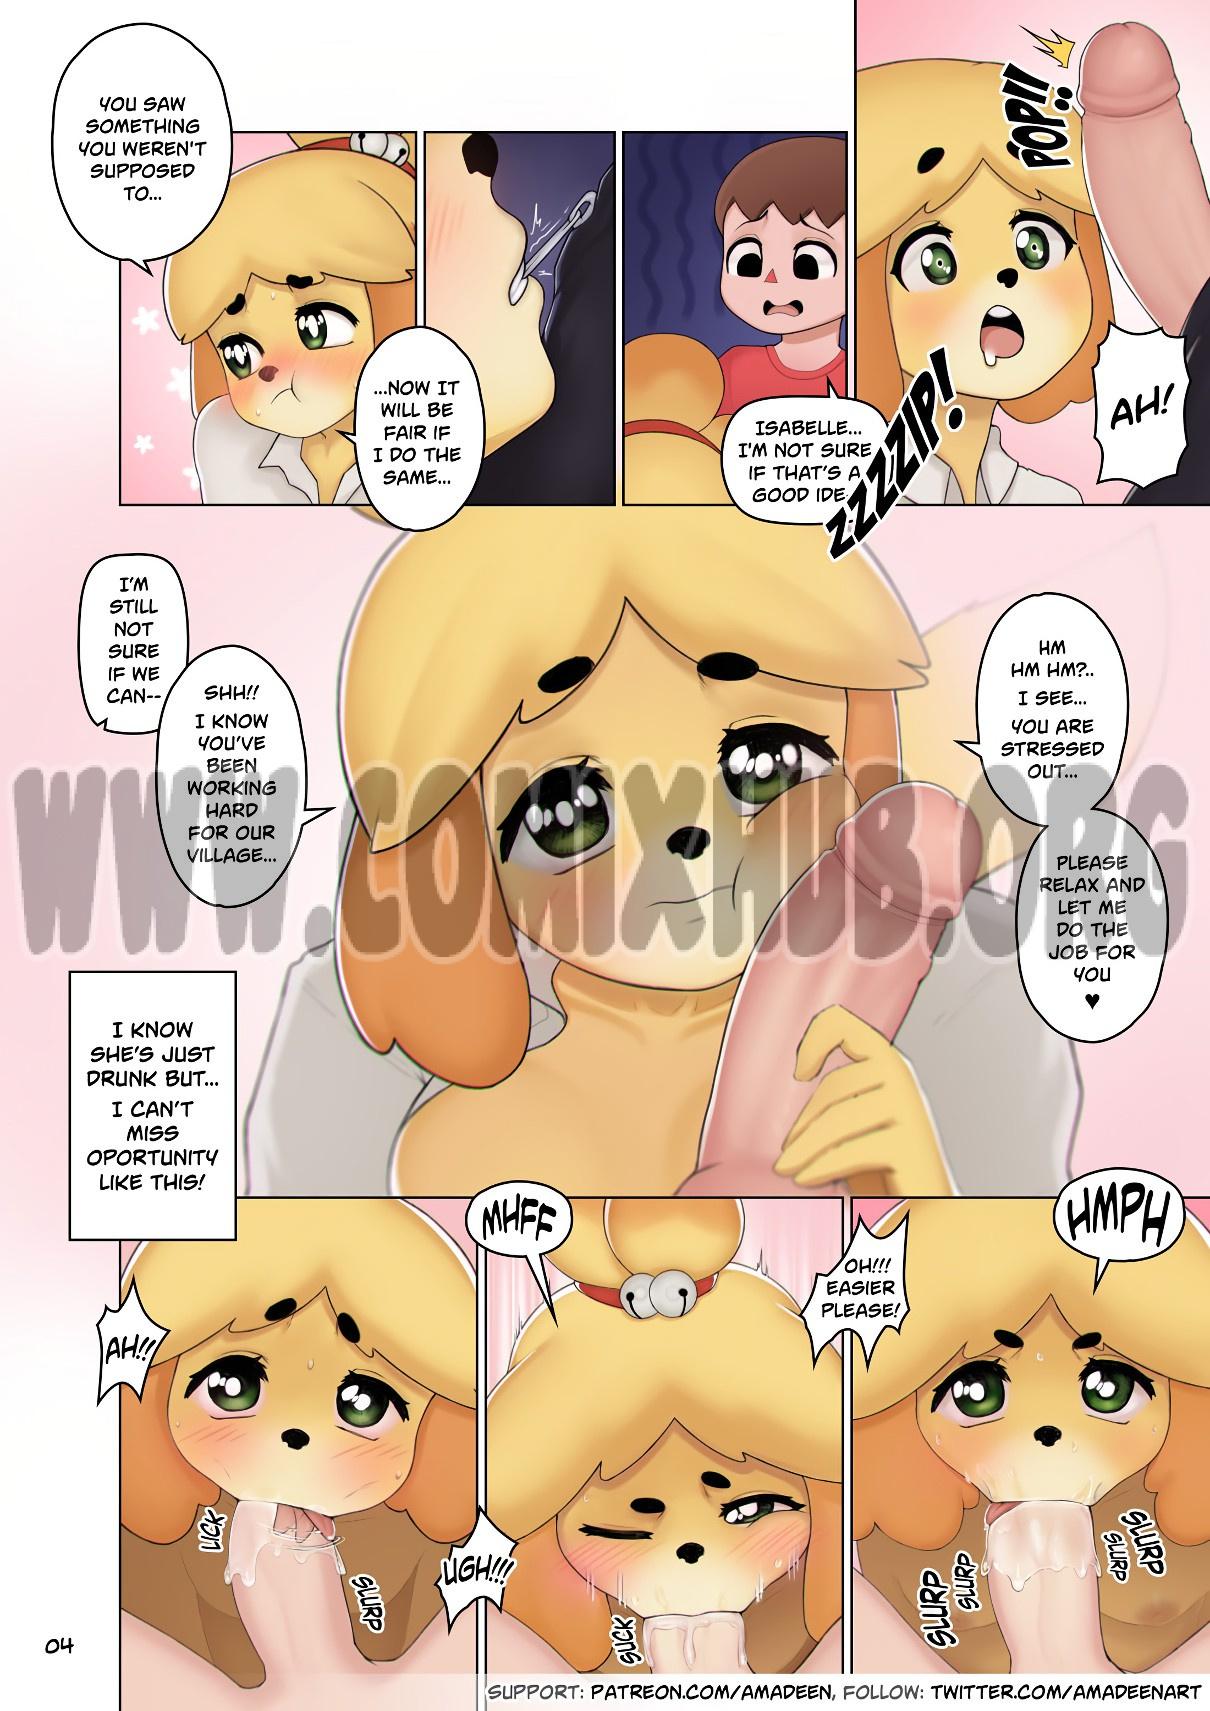 Isabelle's Lunch Incident sex cartoon comics Blowjob, Deepthroat, Furry, Oral sex